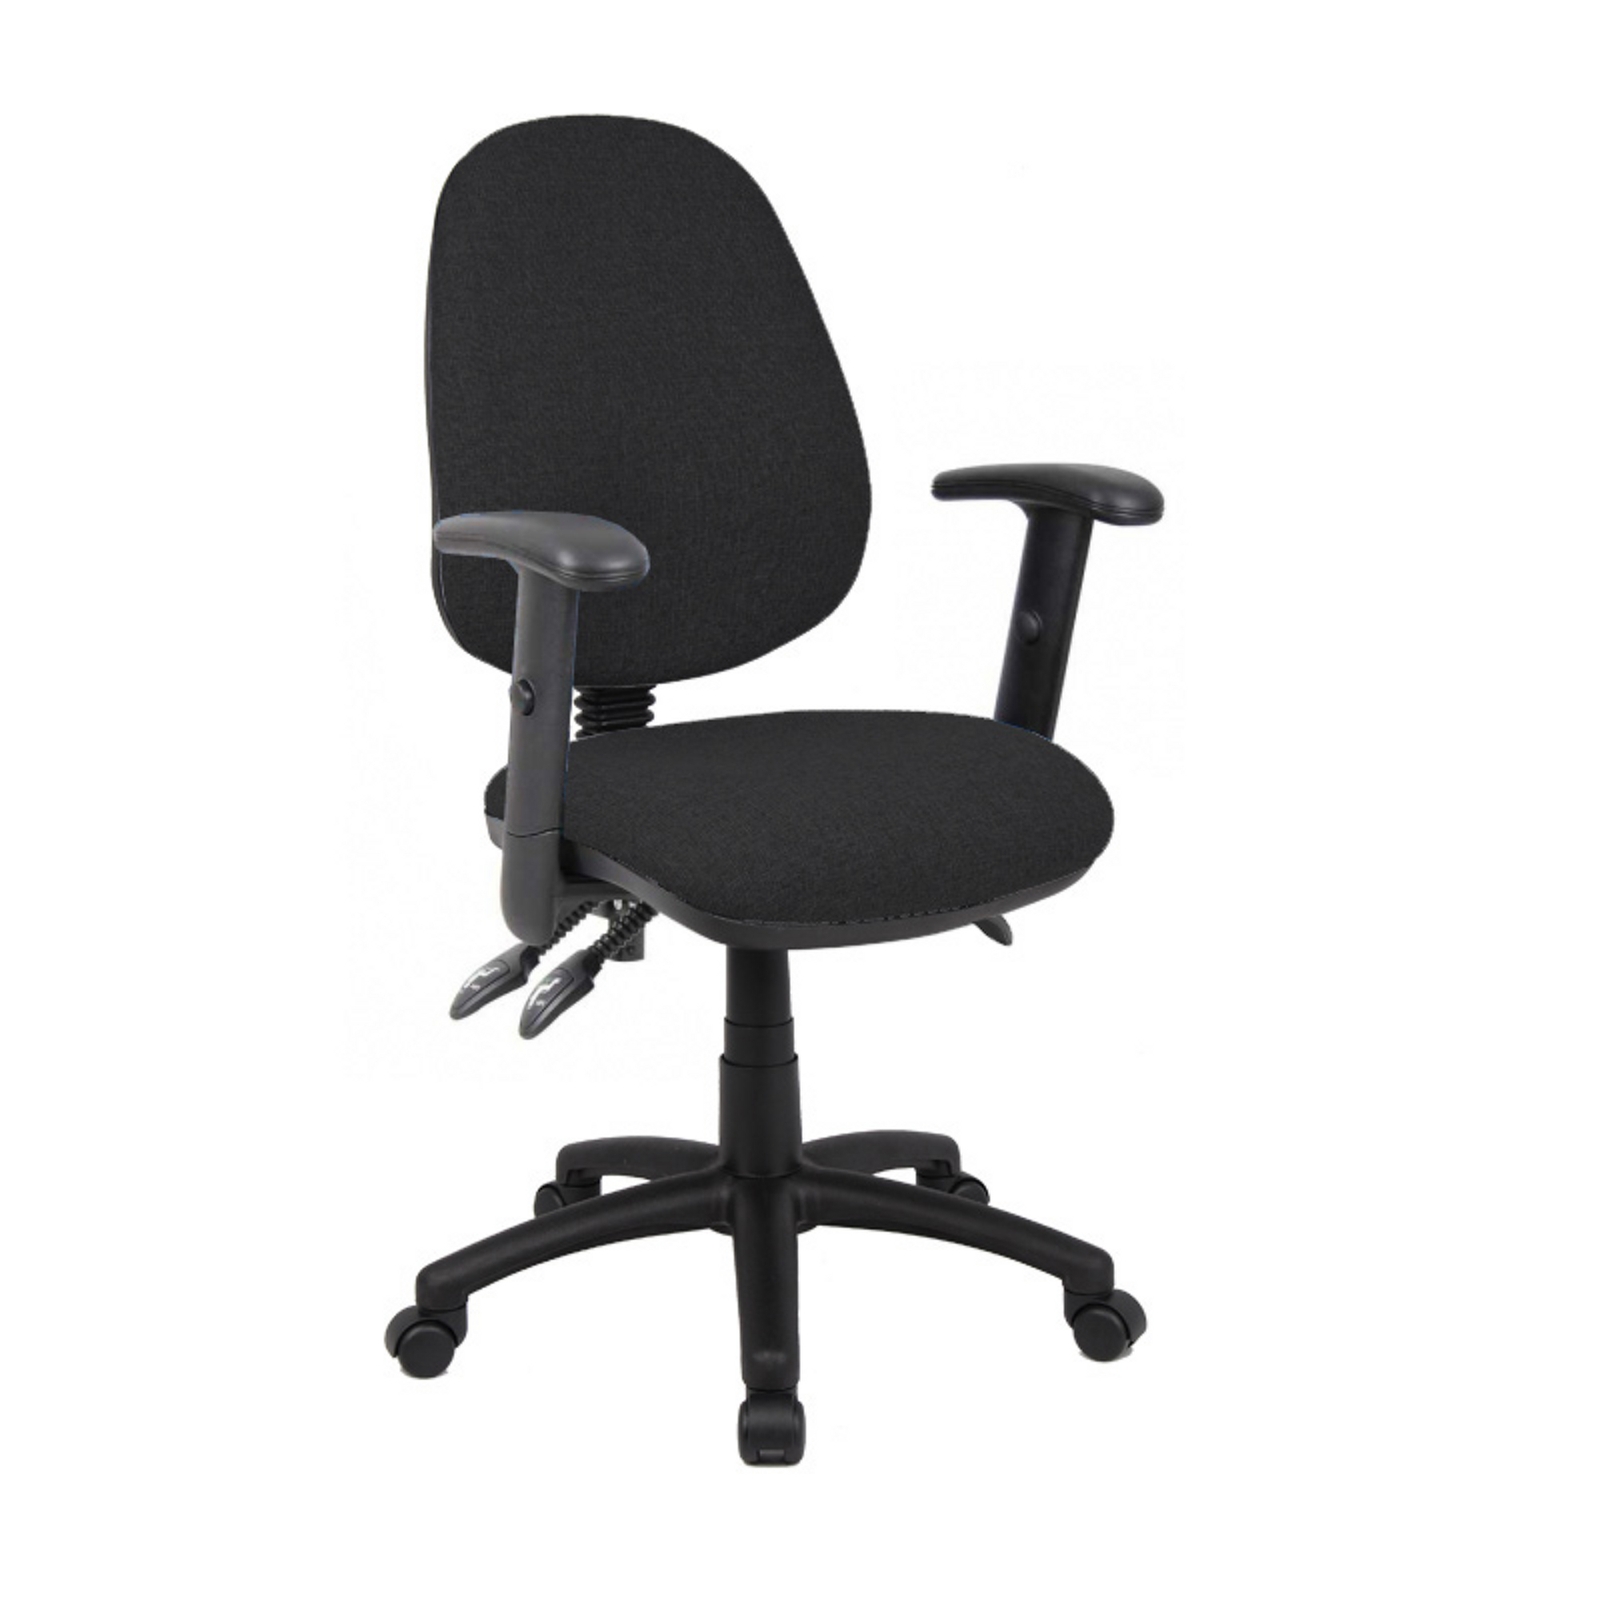 Vantage 3 Lever Adjust Arms Chair Black